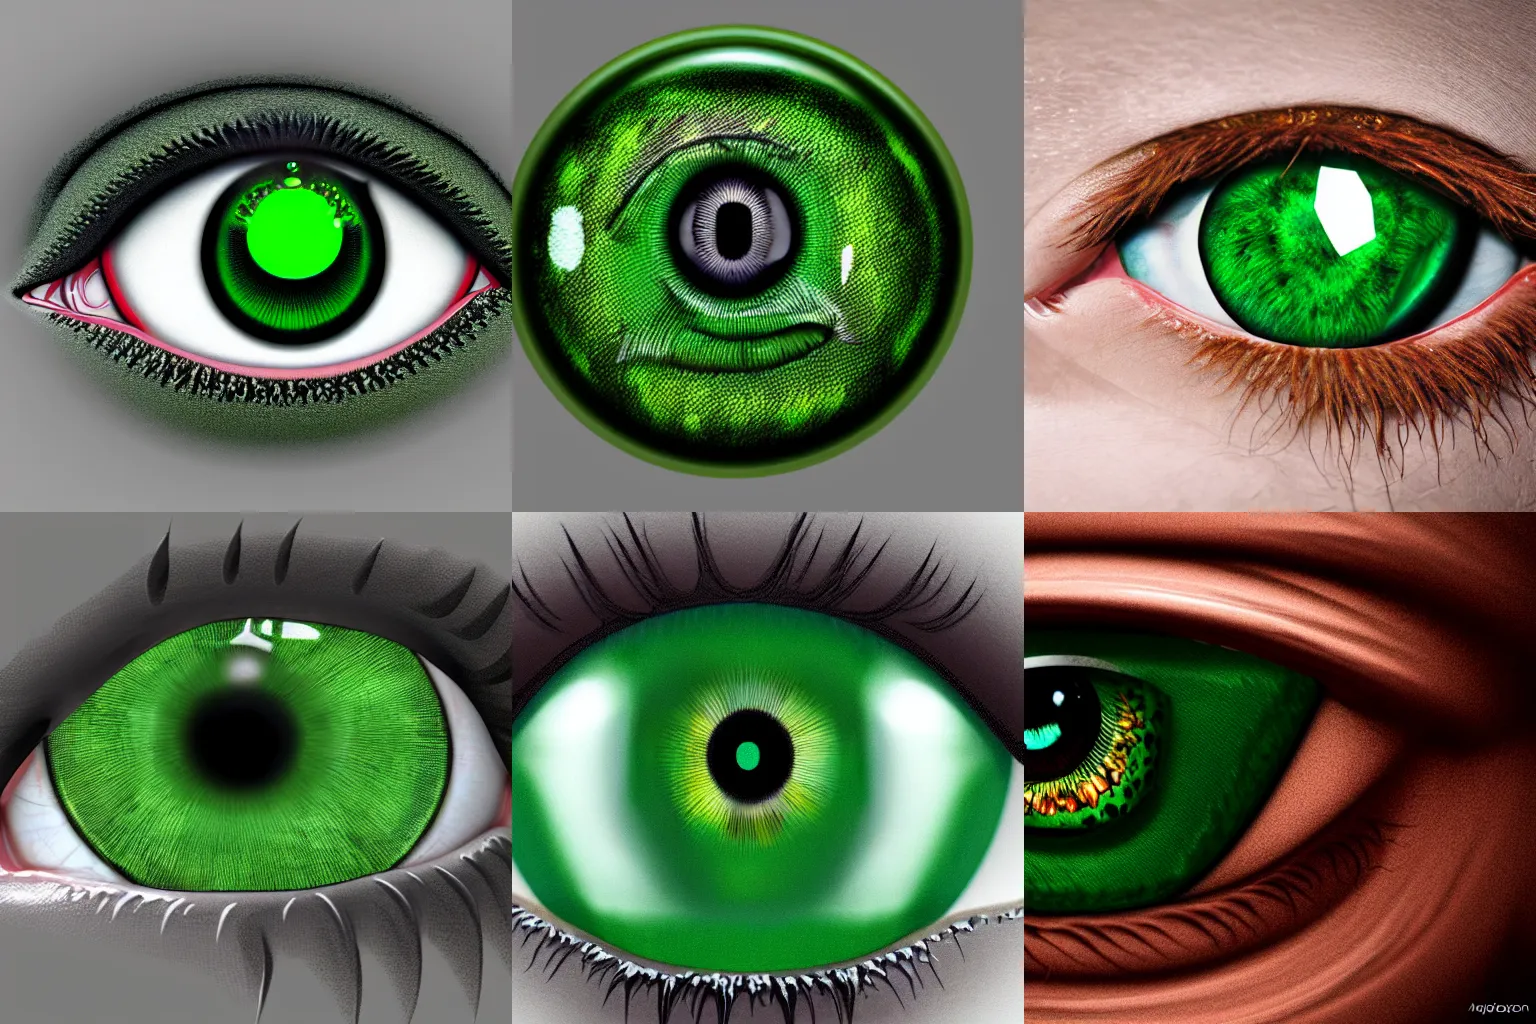 Prompt: A 3D render of a green eye, hyper detailed